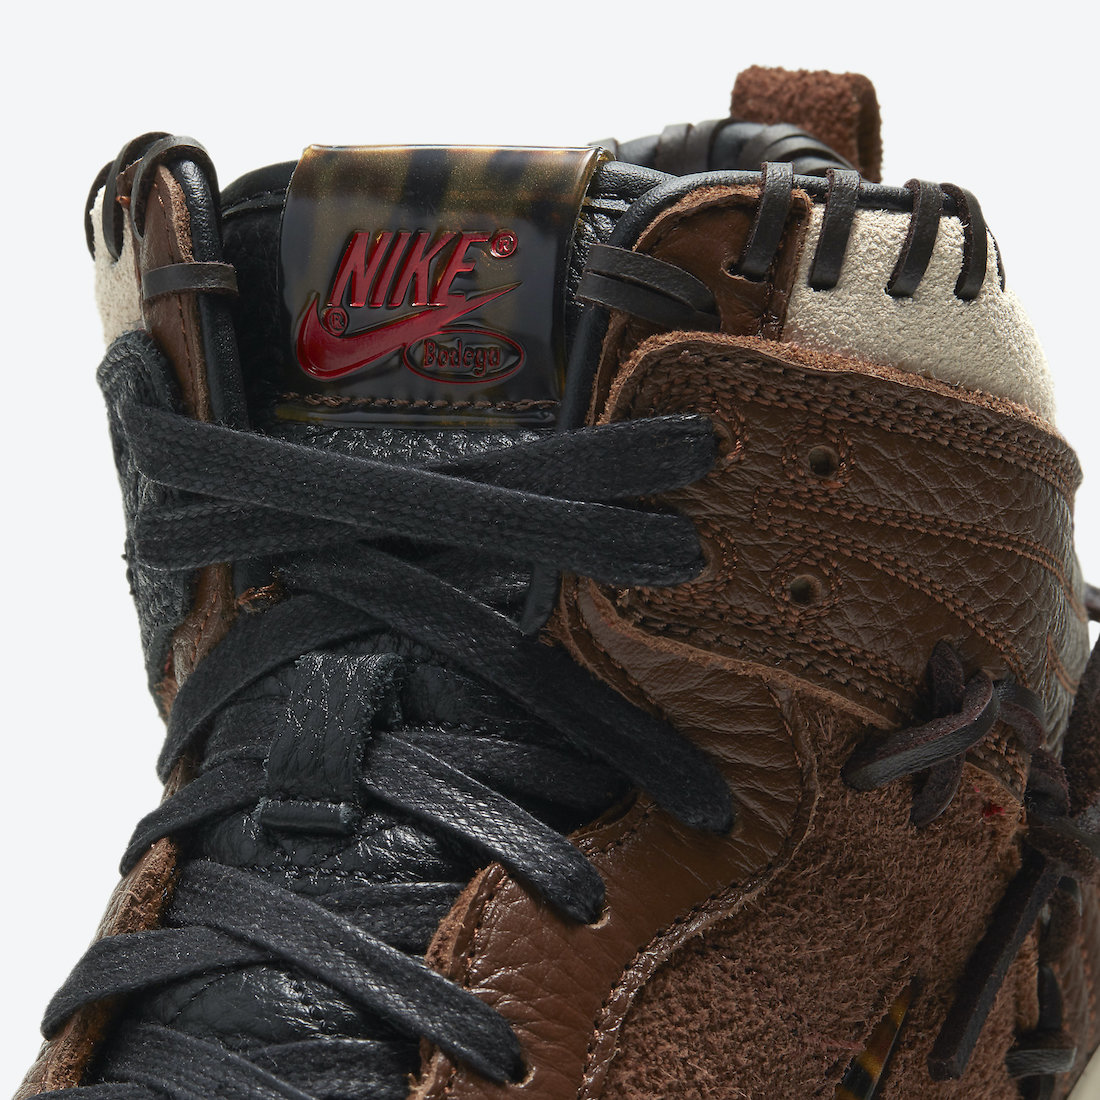 Bodega Nike Dunk High Fauna Brown CZ8125-200 Release Date